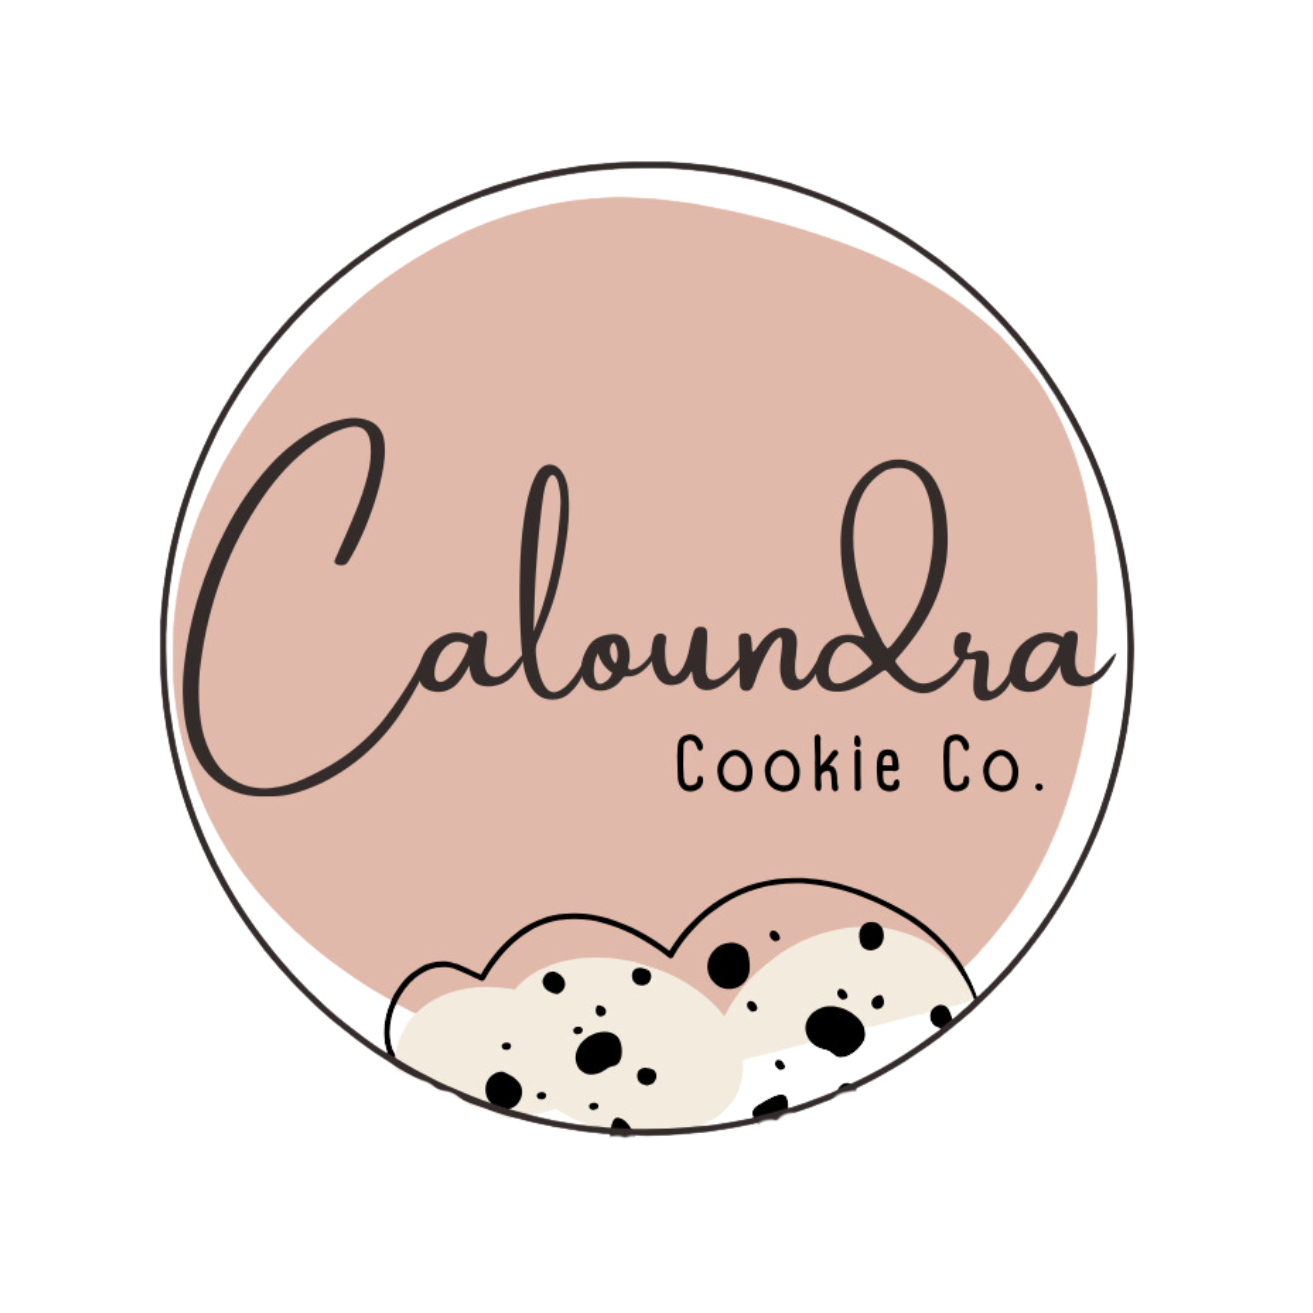 Caloundra Cookie Co.